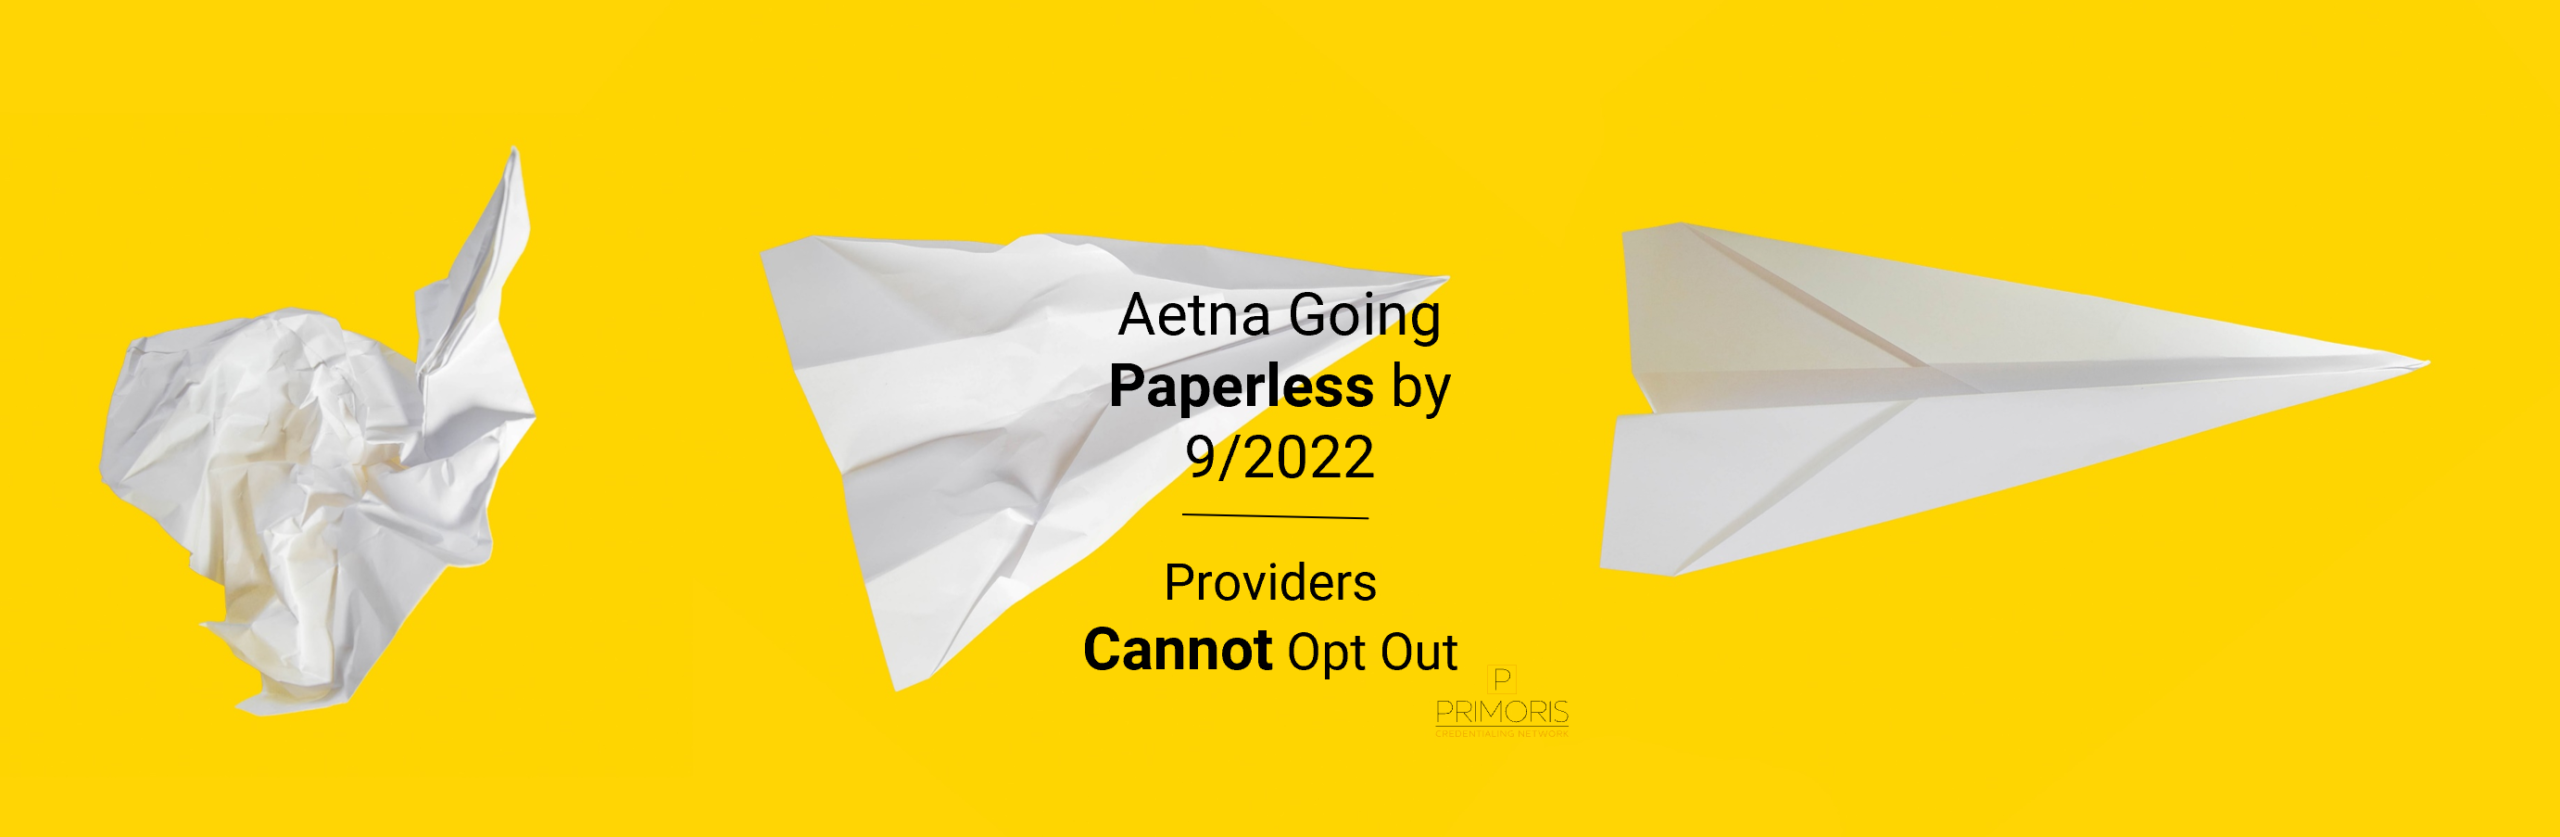 Aetna Going Paperless